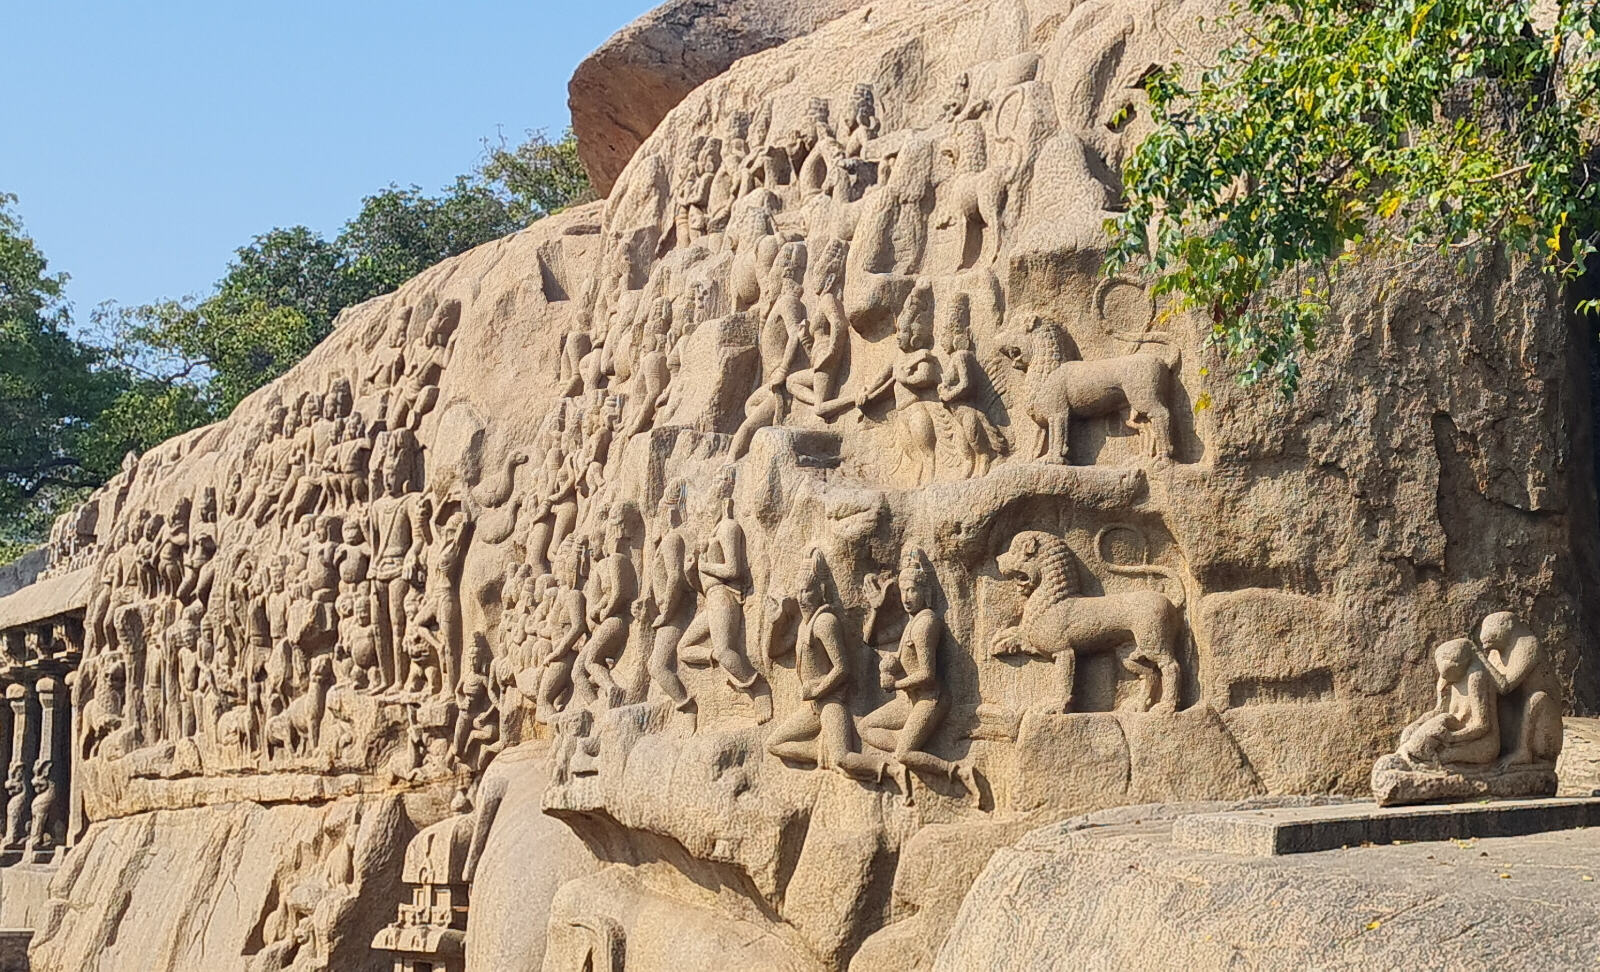 Hindu epic rock carving at Mahabalipuram, India